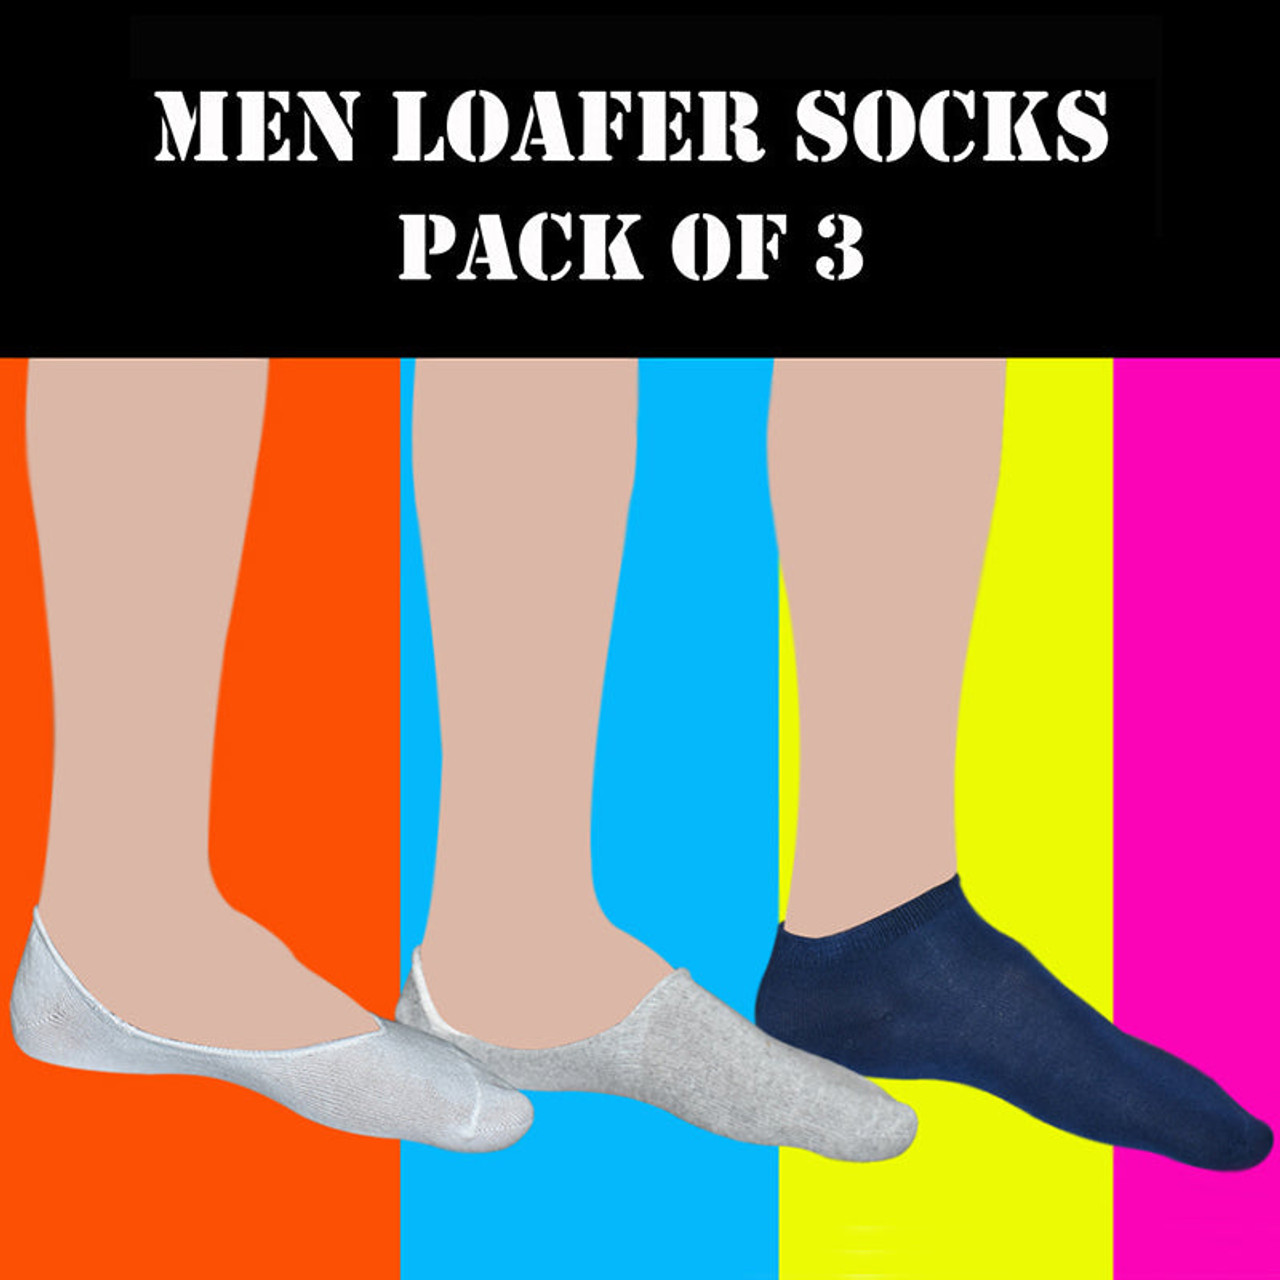 Buy Online Men Loafer Socks - Pack of 3 at